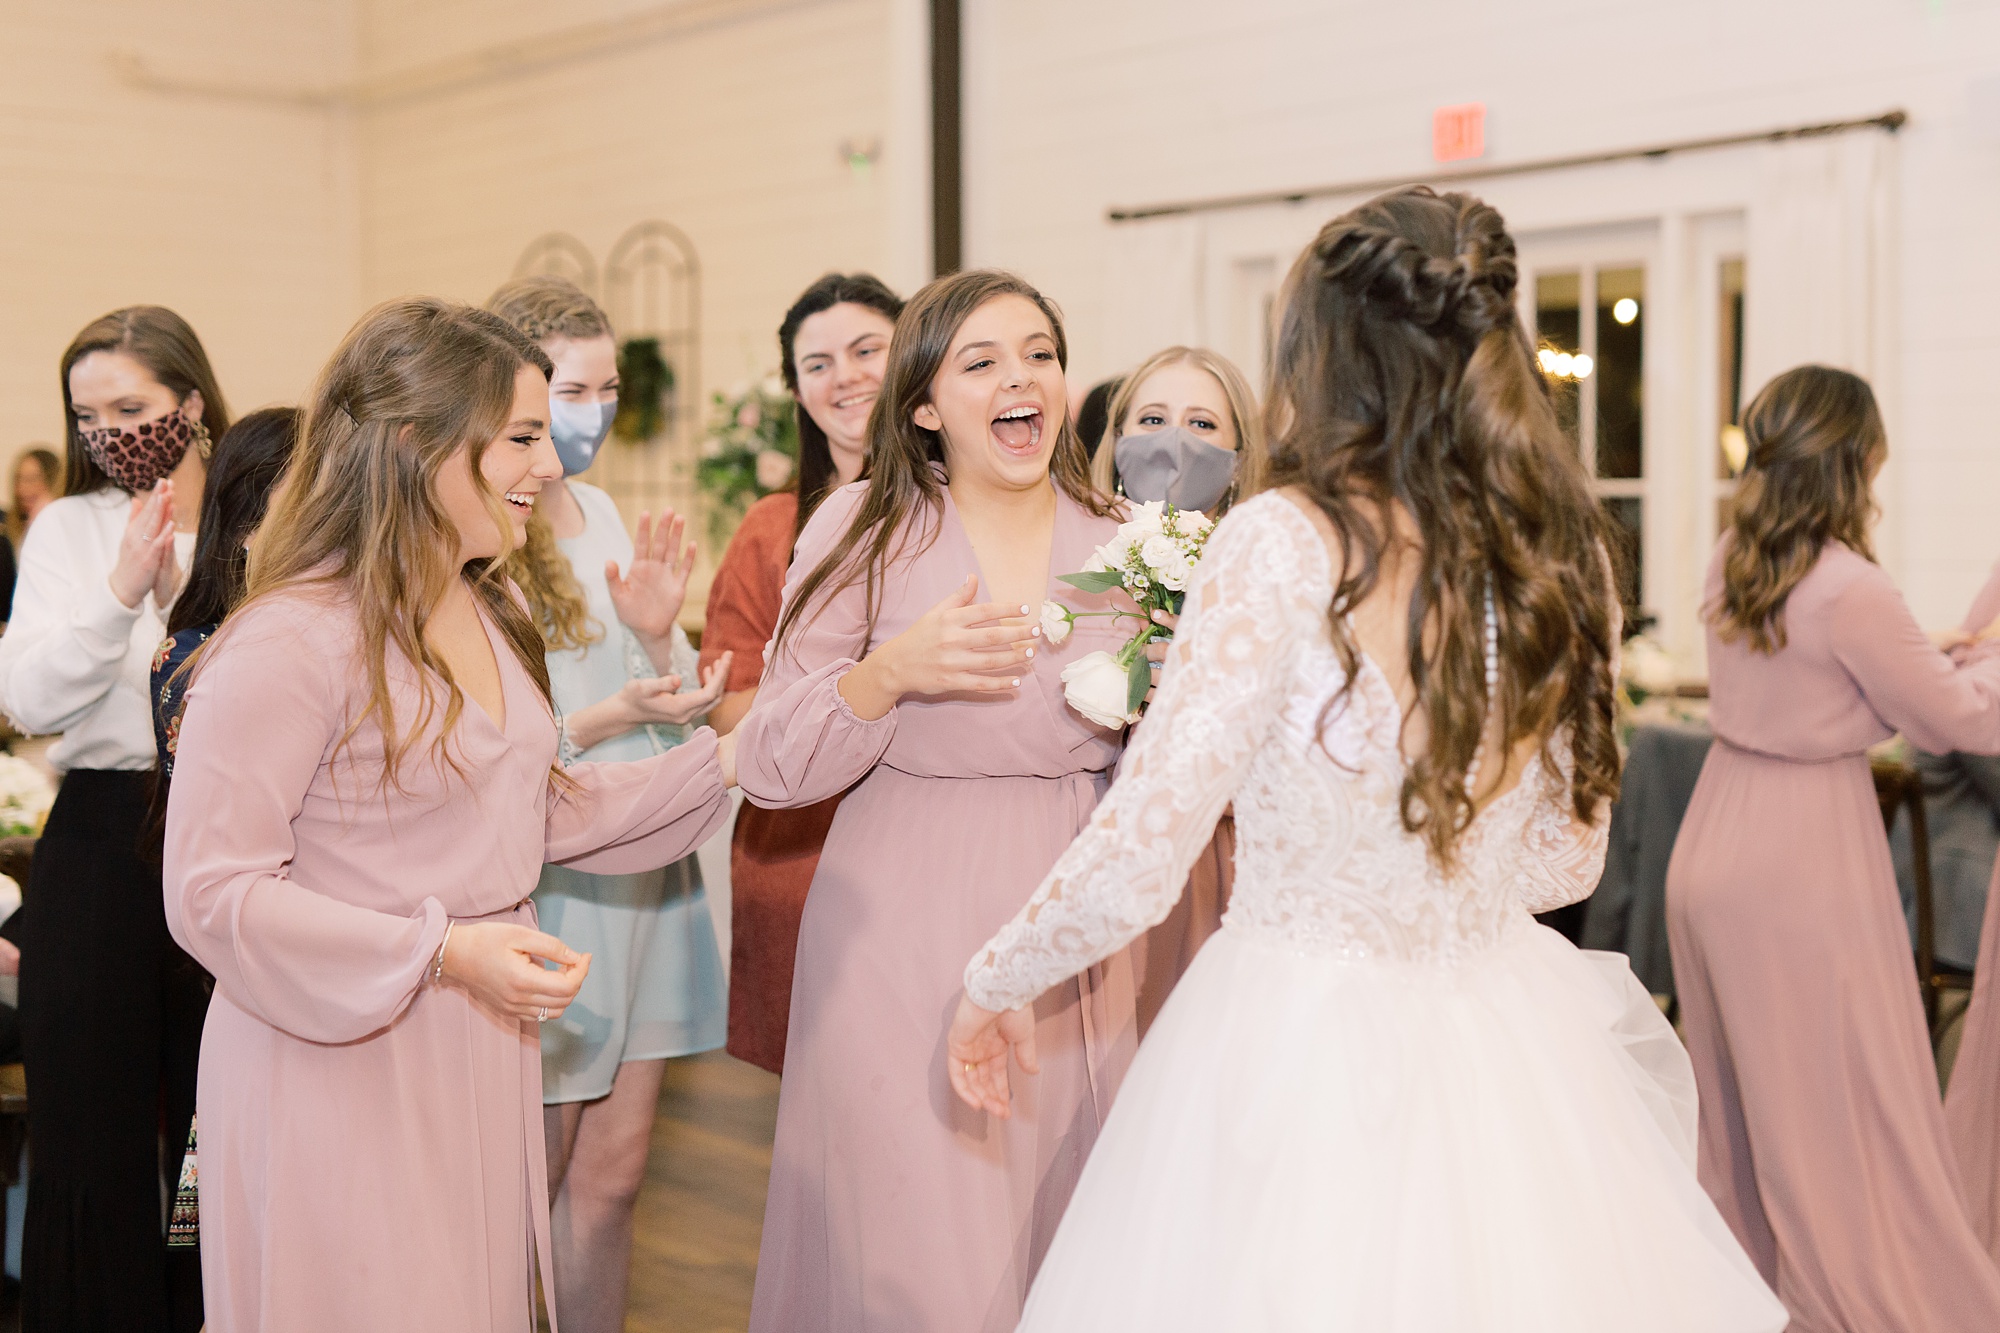 HighPointe Estate wedding reception bouquet toss winner laughs with bride